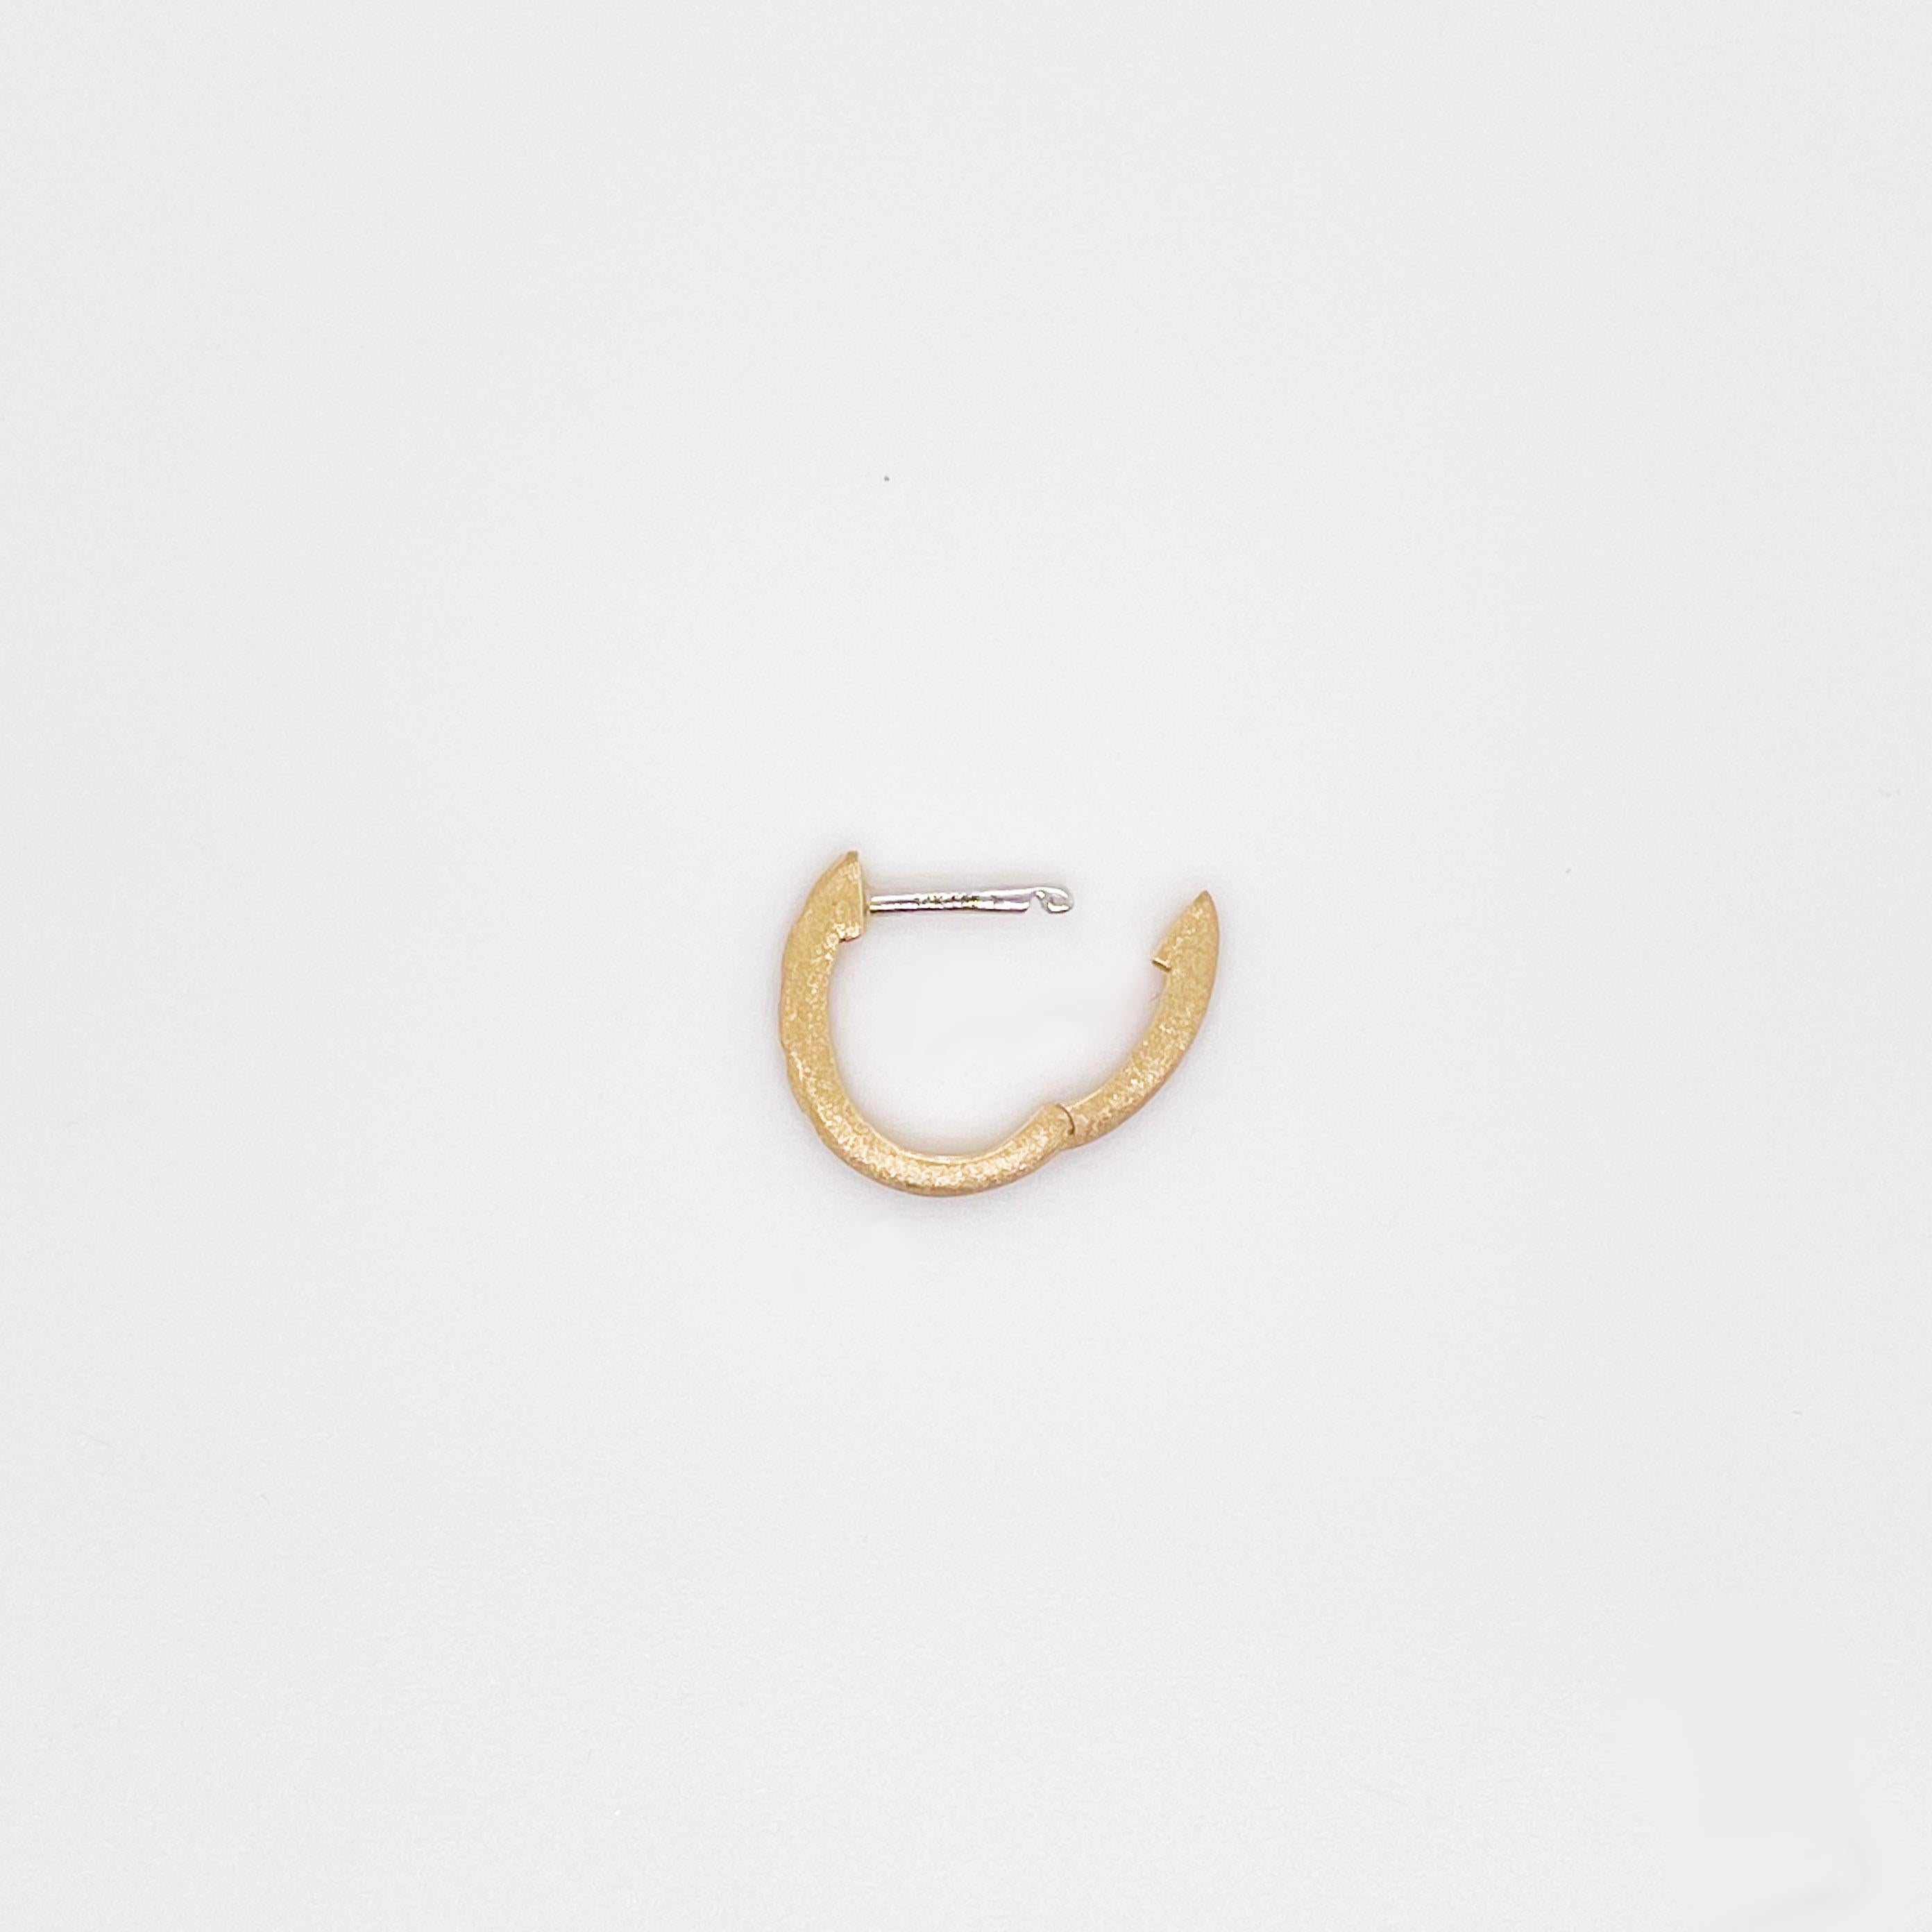 Round Cut Diamond Huggie Earrings in 14K Yellow Gold Satin Finish .02 ct Diamond Earrings For Sale